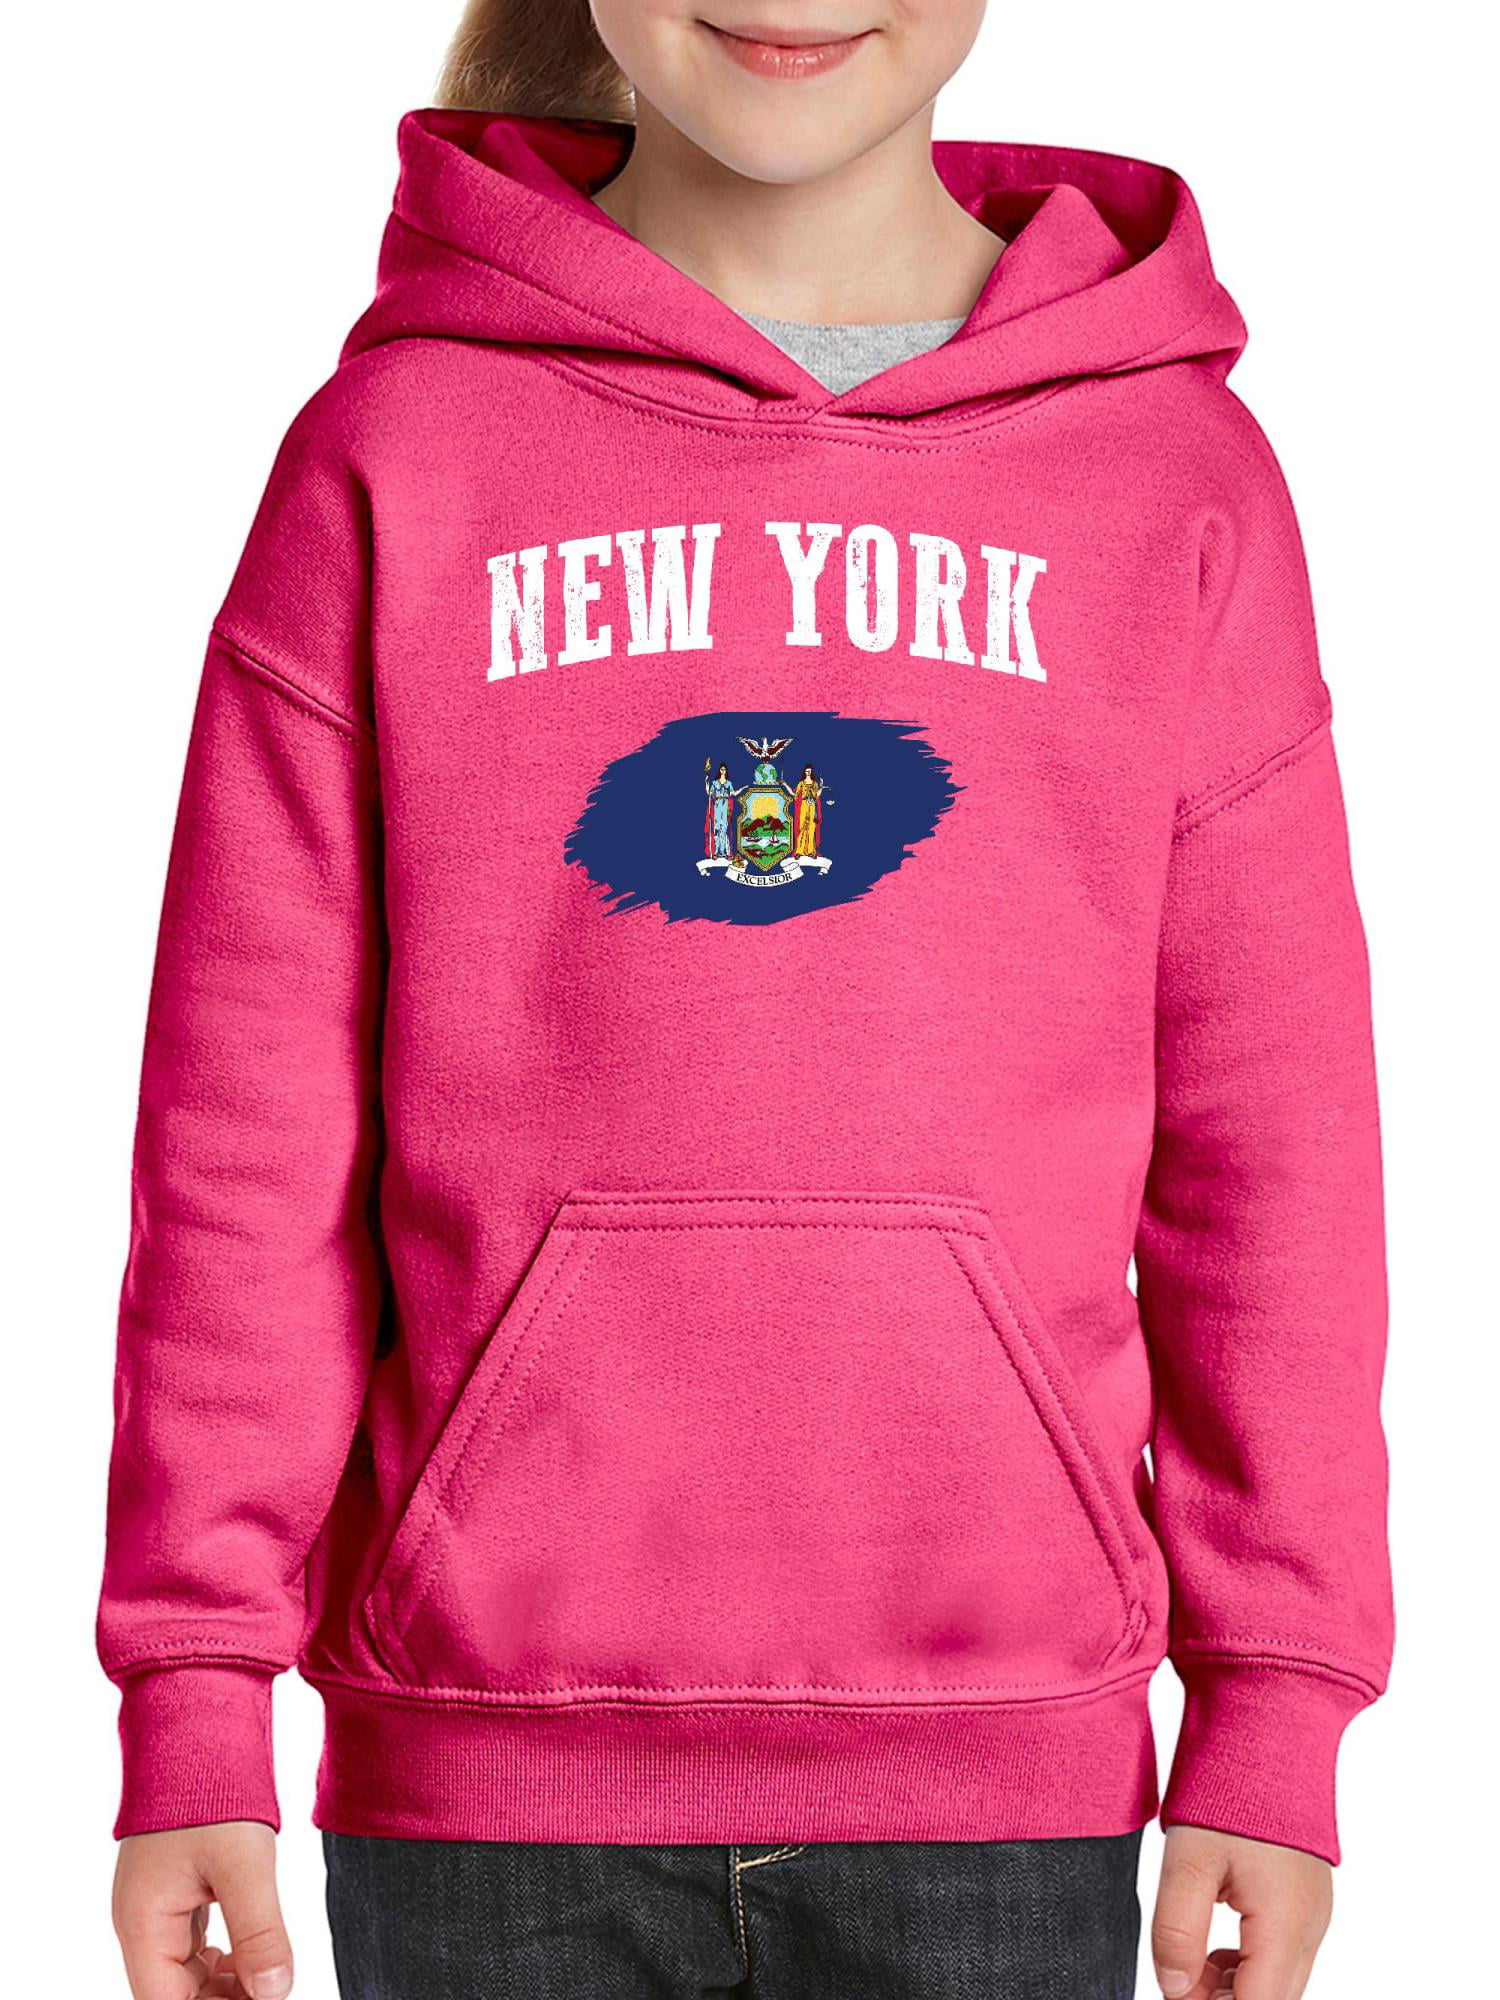 NIB - Big Girls Hoodies and Sweatshirts - New York - Walmart.com